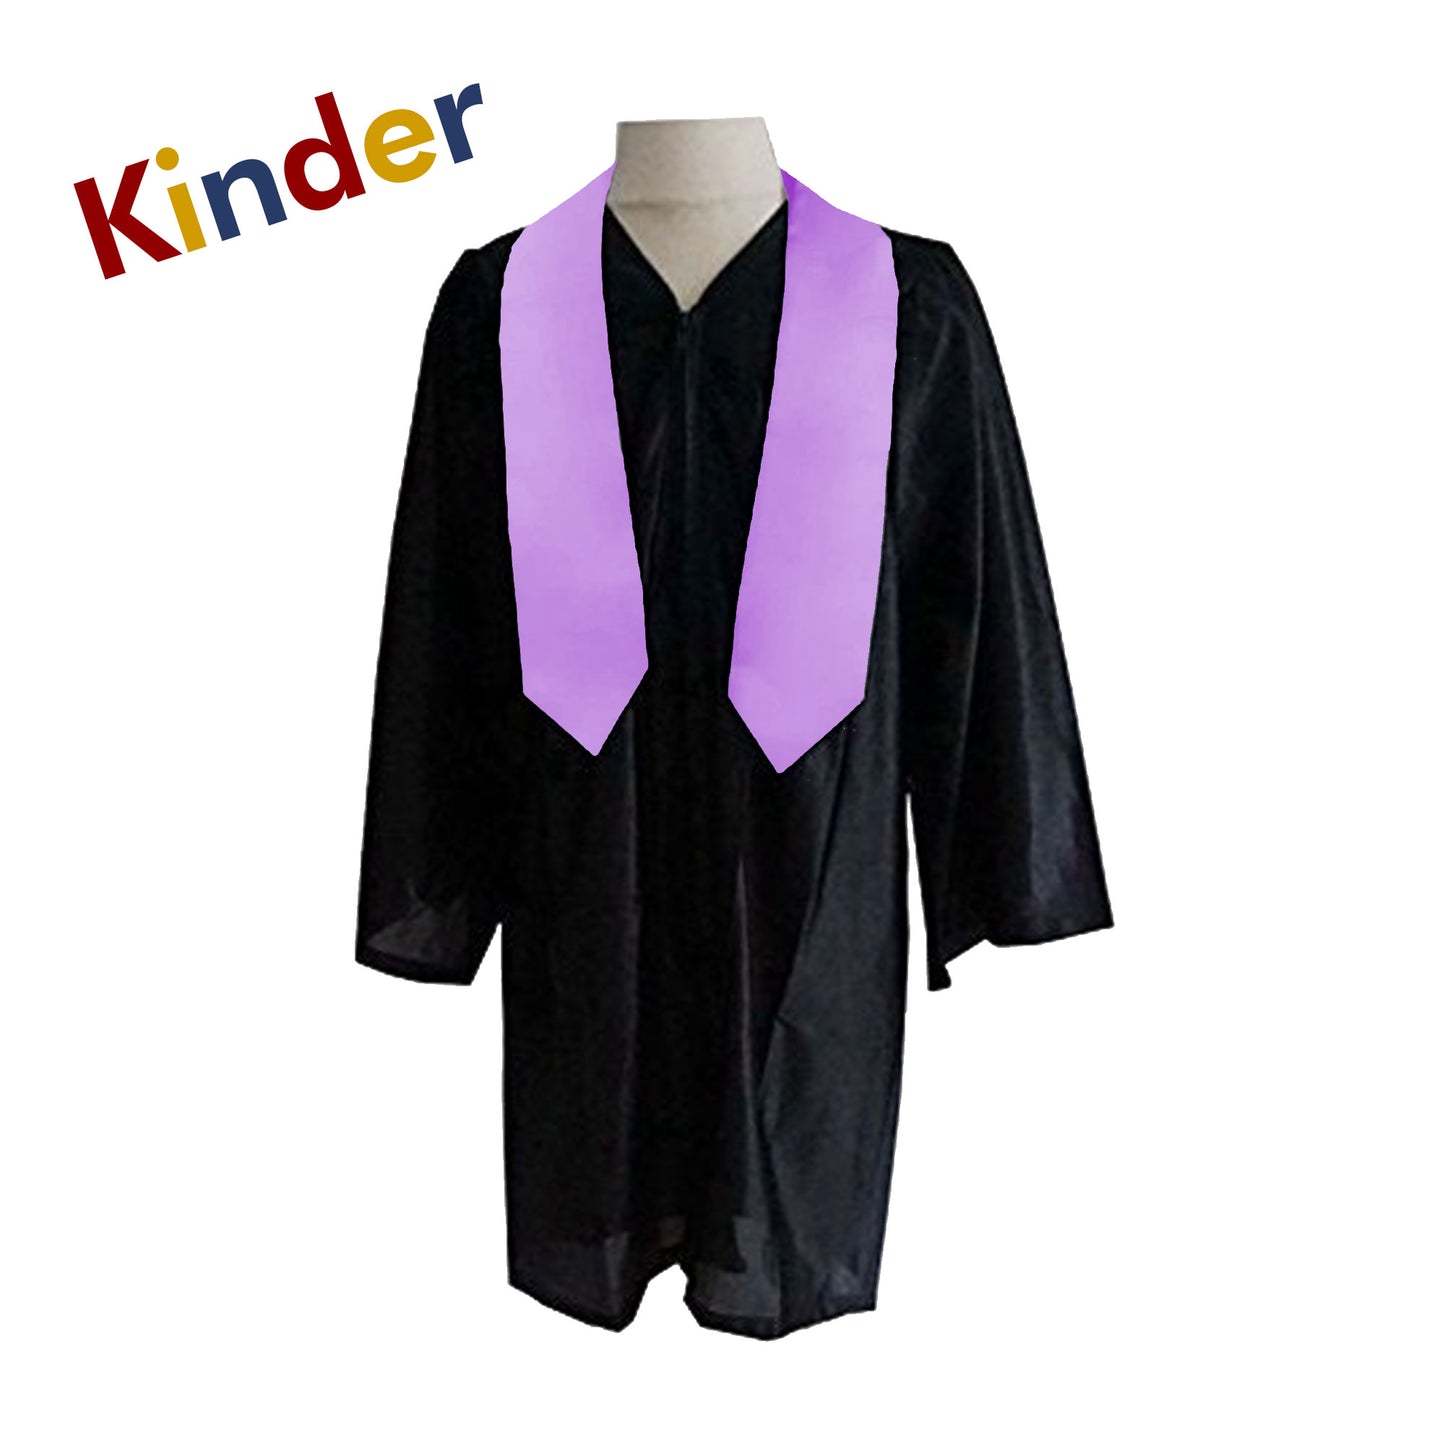 Lavender Kindergarten Preschool Graduation Stole - Clearance Sale